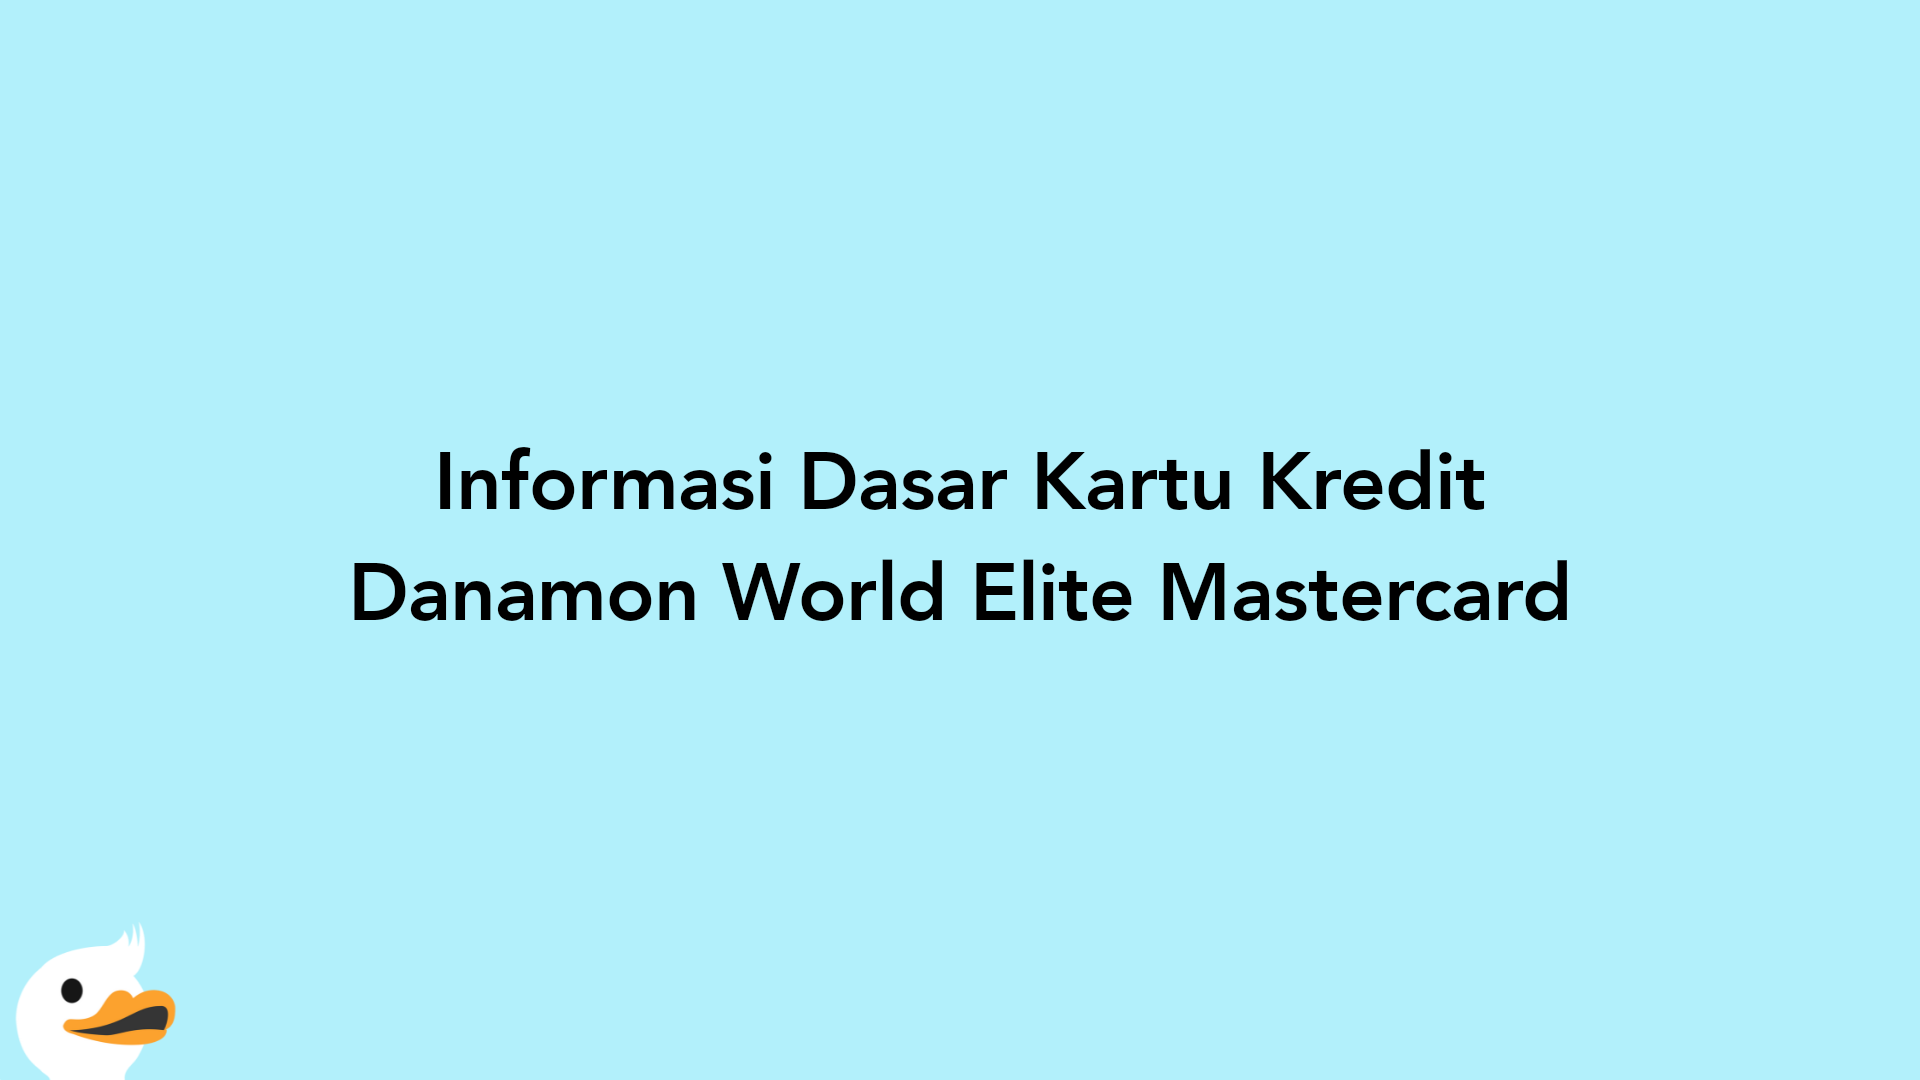 Informasi Dasar Kartu Kredit Danamon World Elite Mastercard